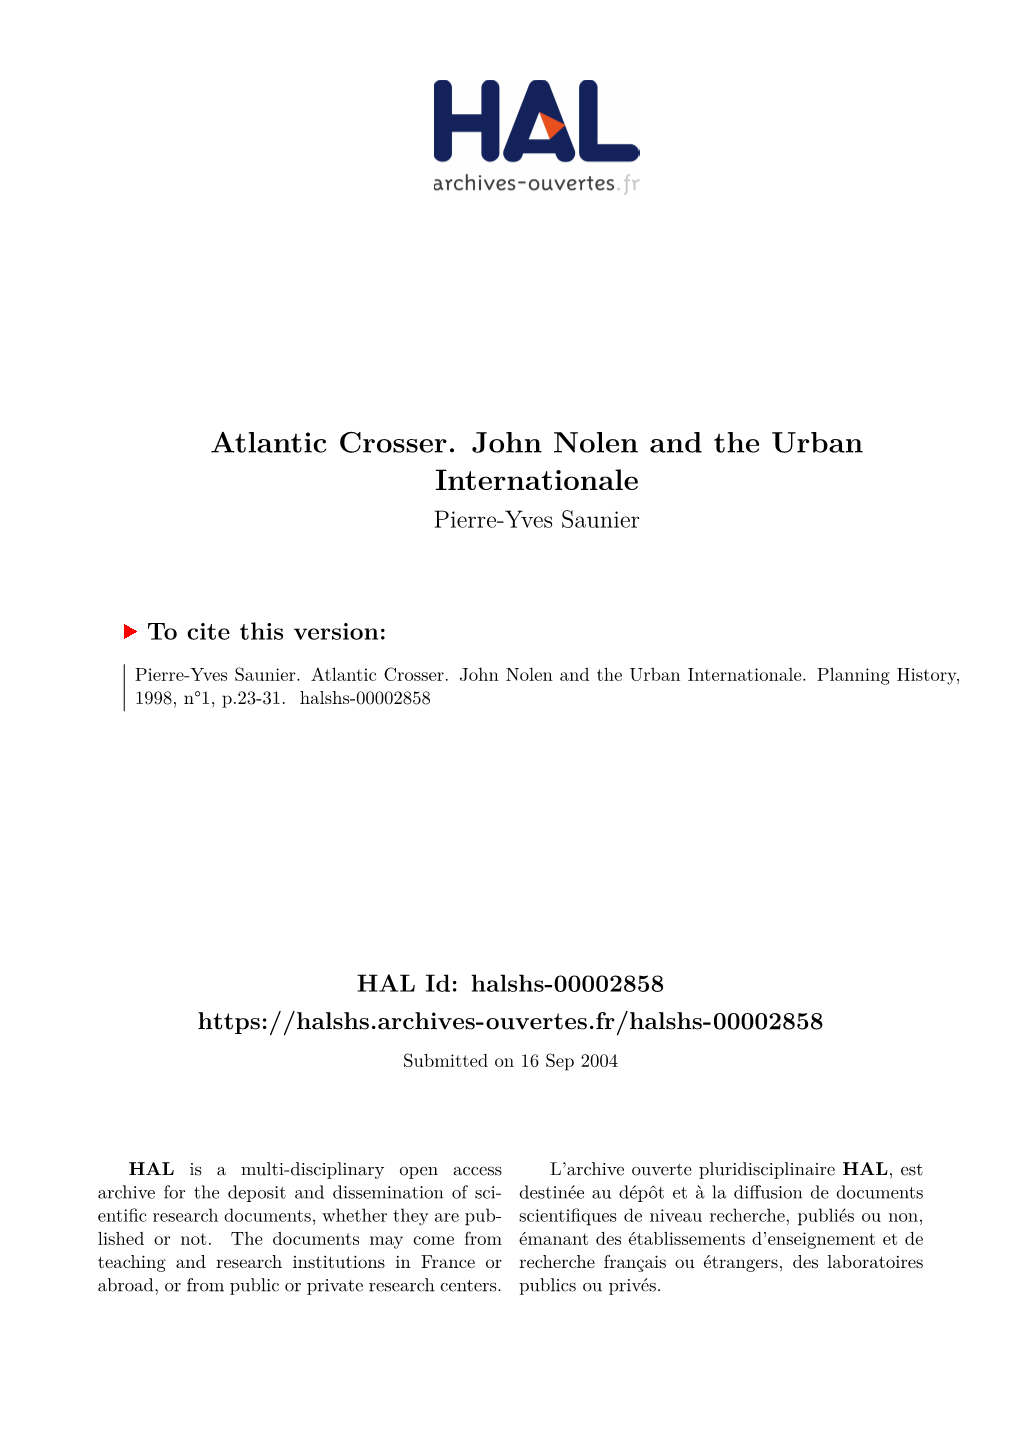 Atlantic Crosser. John Nolen and the Urban Internationale Pierre-Yves Saunier